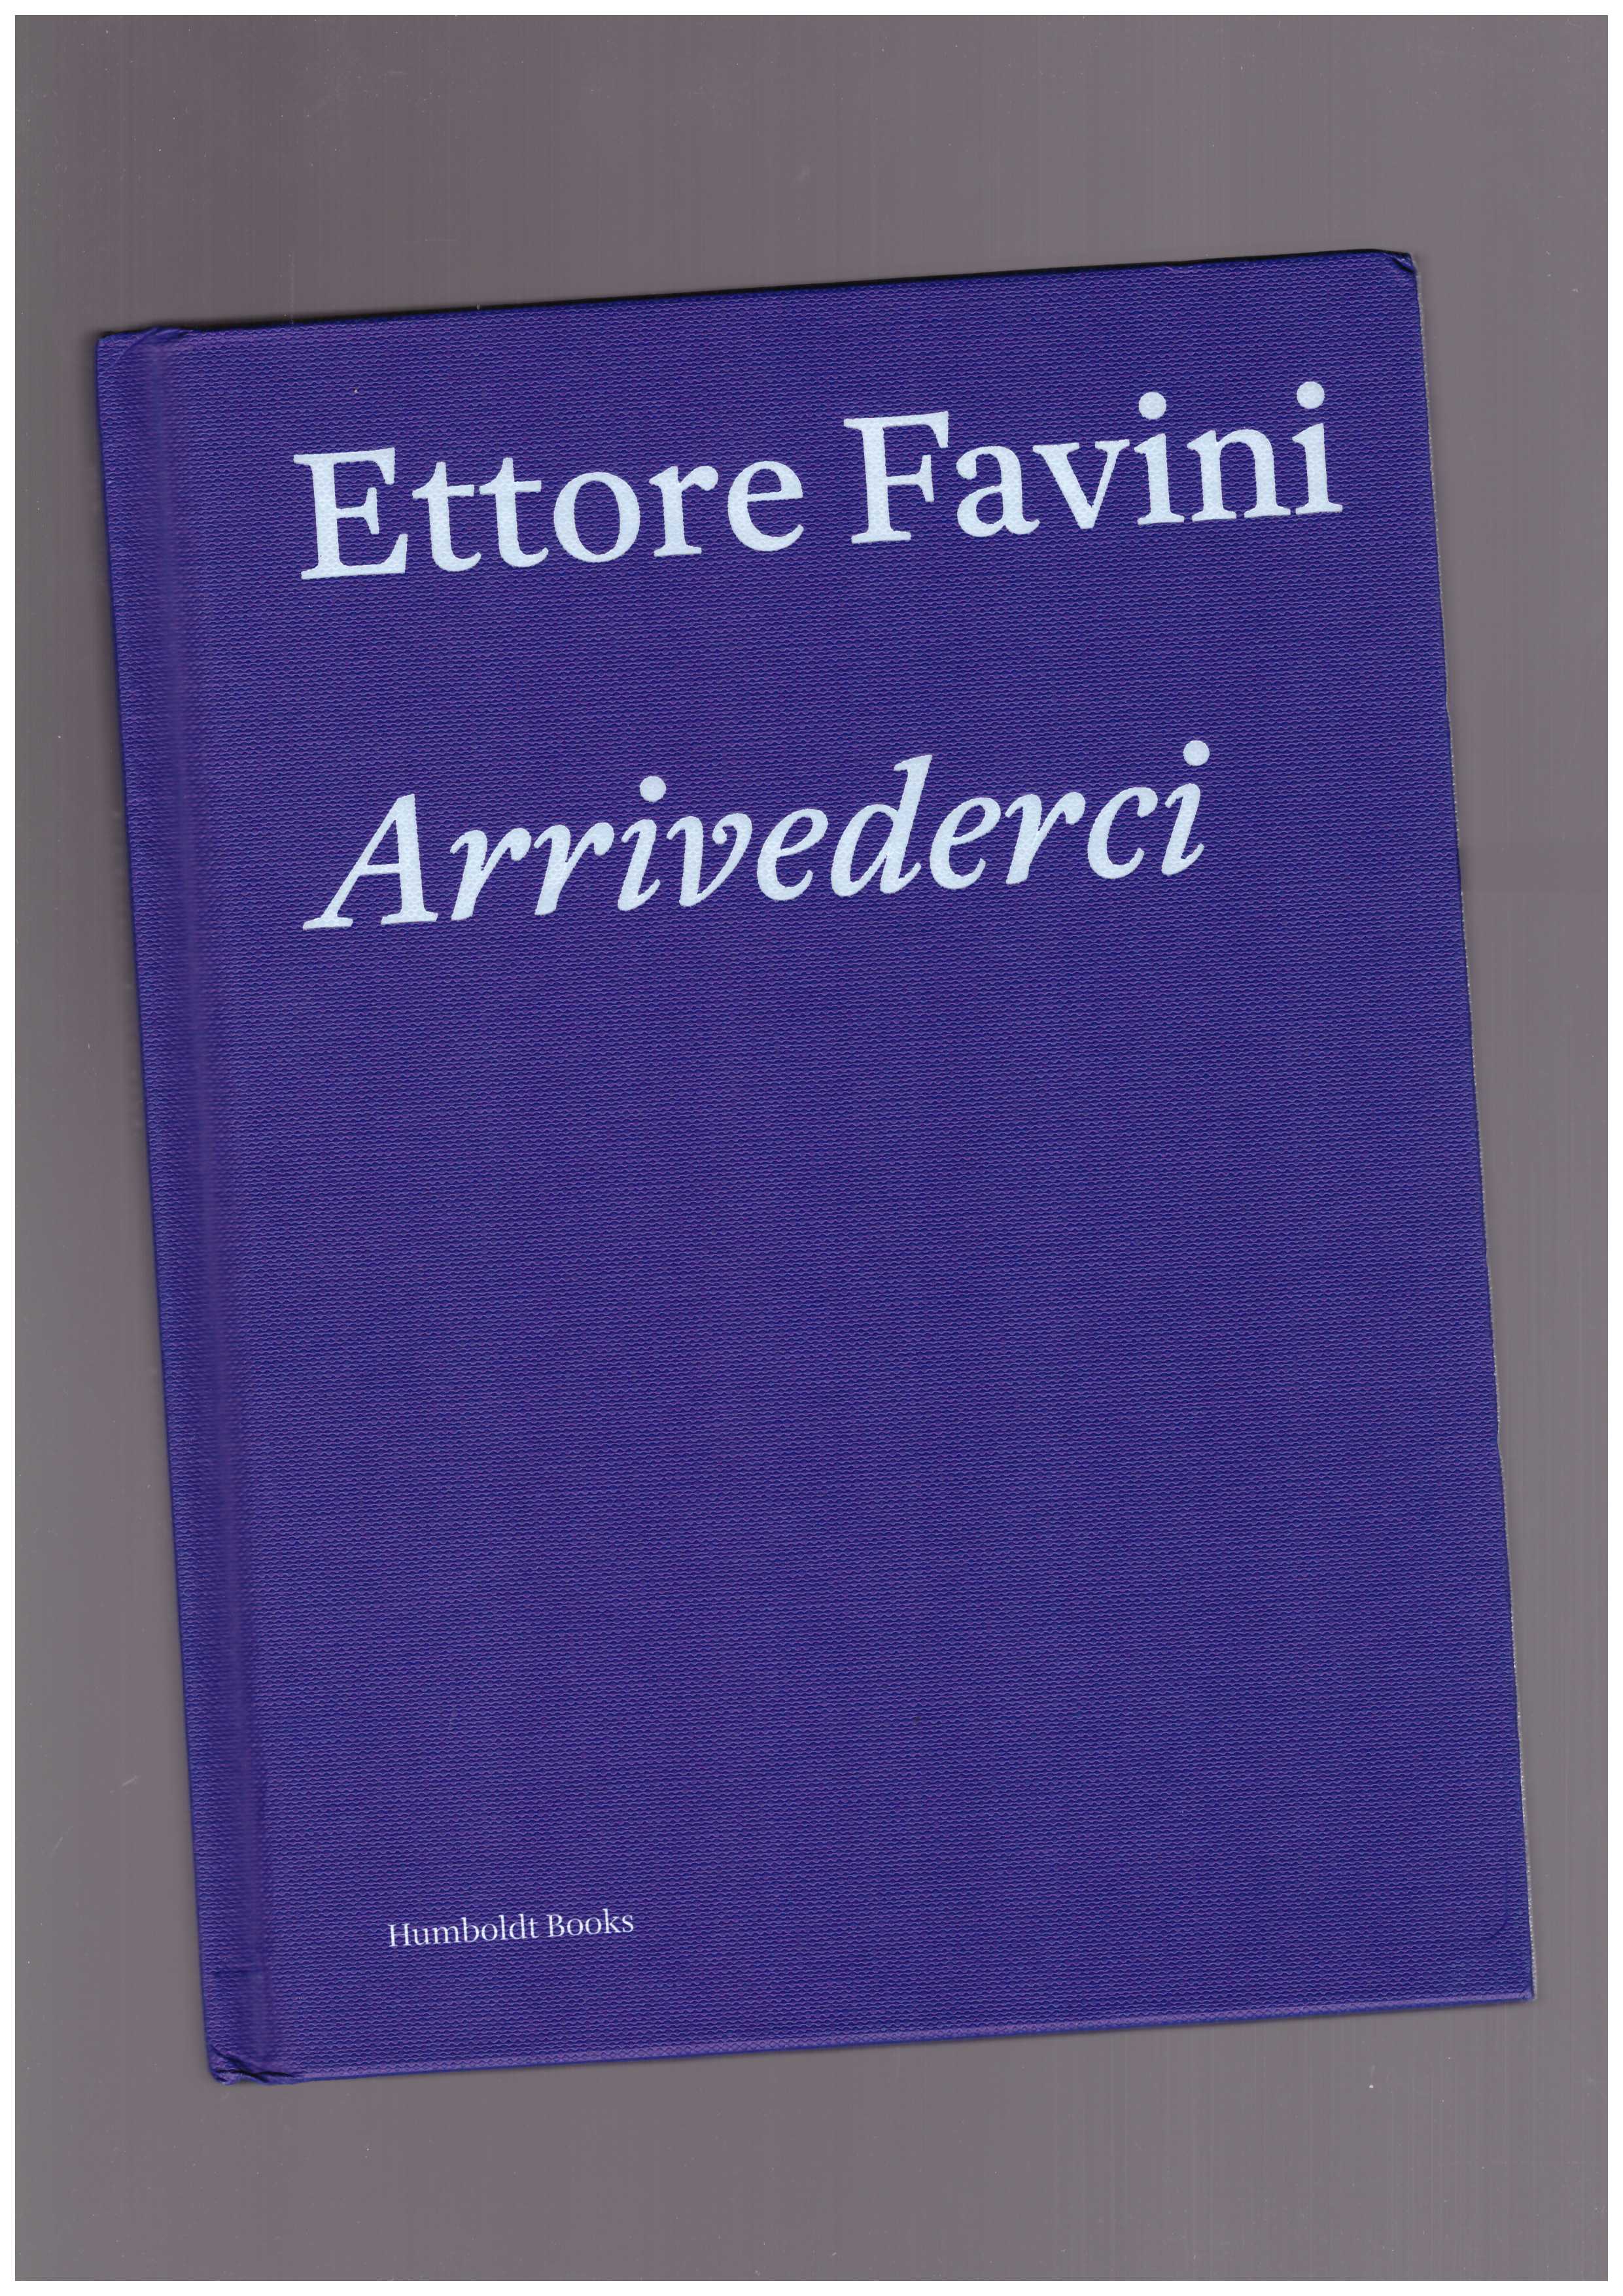 FAVINI, Ettore  - Arrivederci